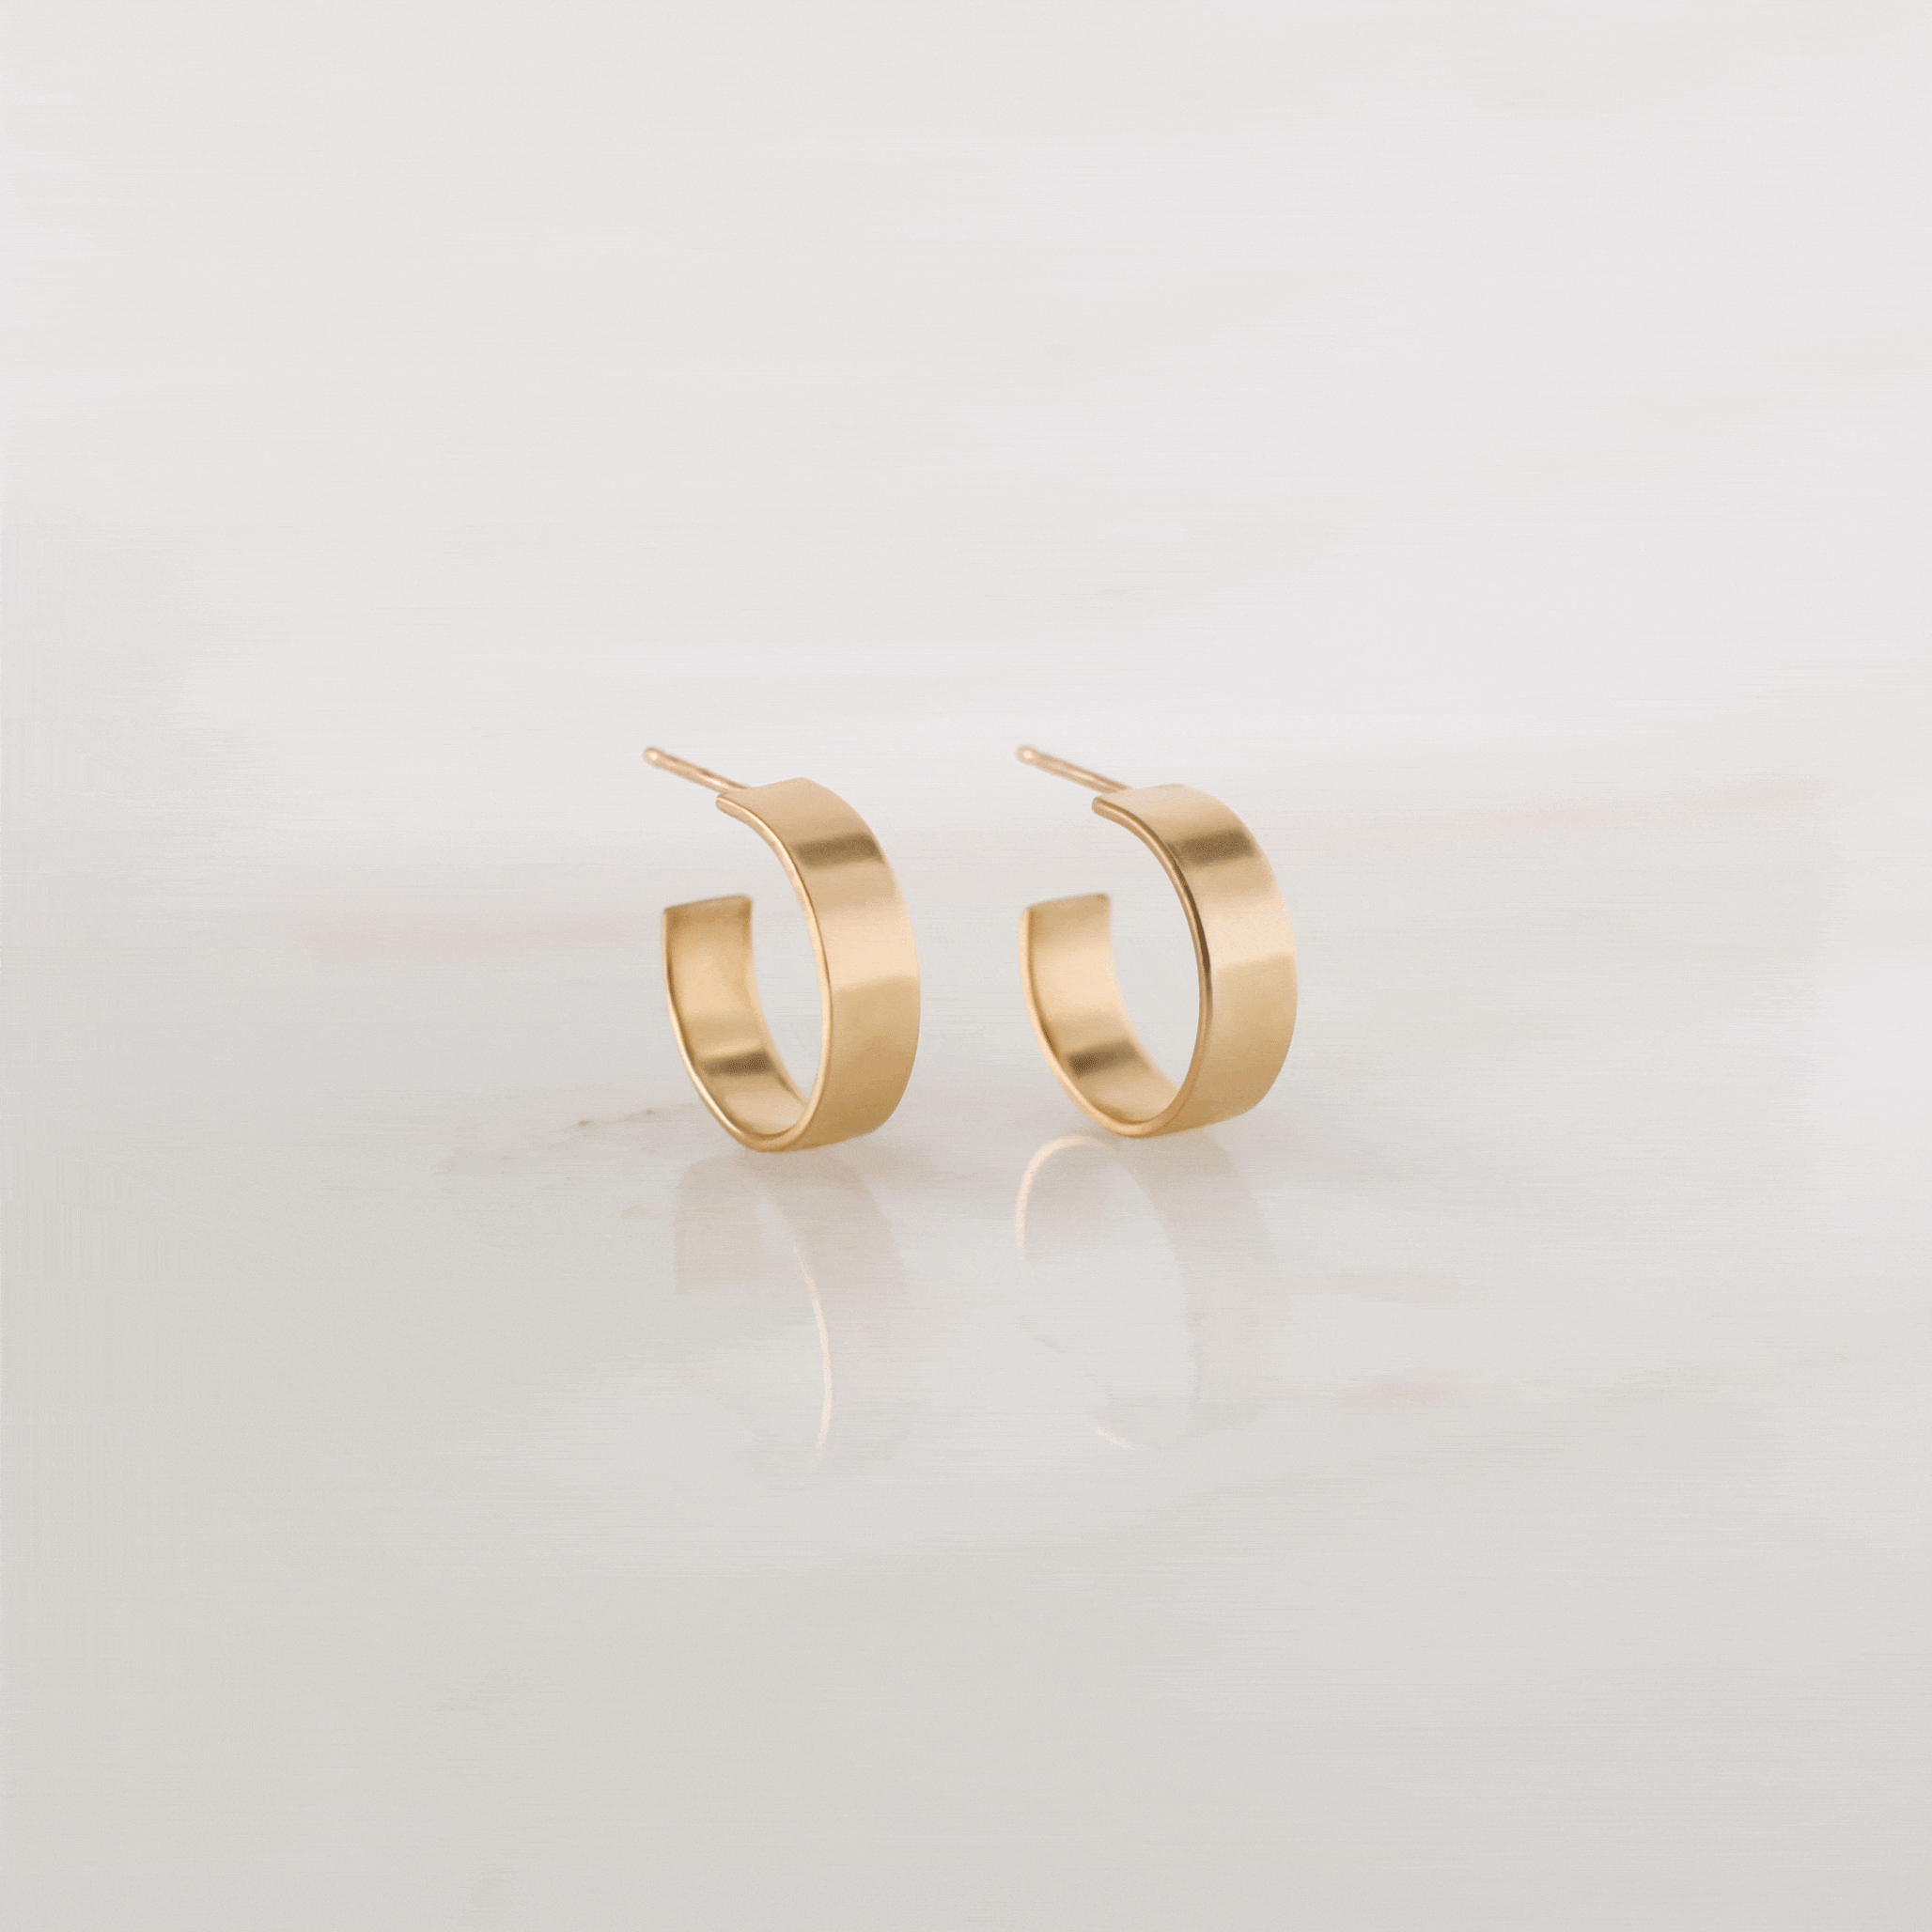 Maude Hoop Earrings - Nolia Jewelry - Meaningful + Sustainably Handcrafted Jewelry